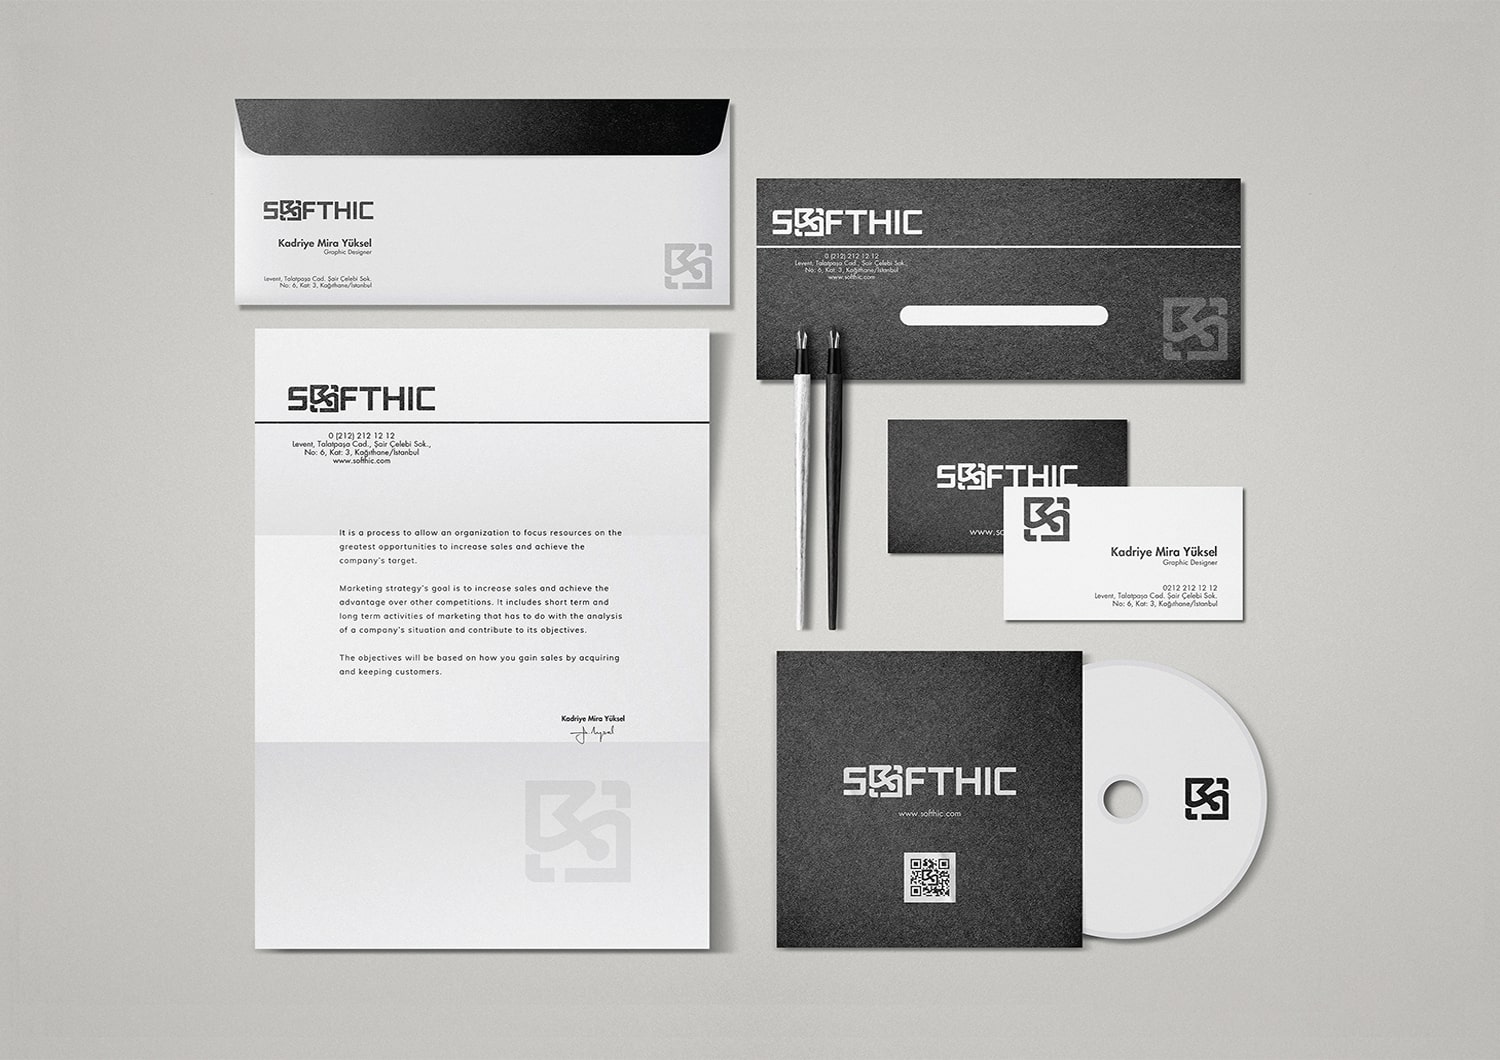 Sofhic Logo Design, Visual Identity, Social Media